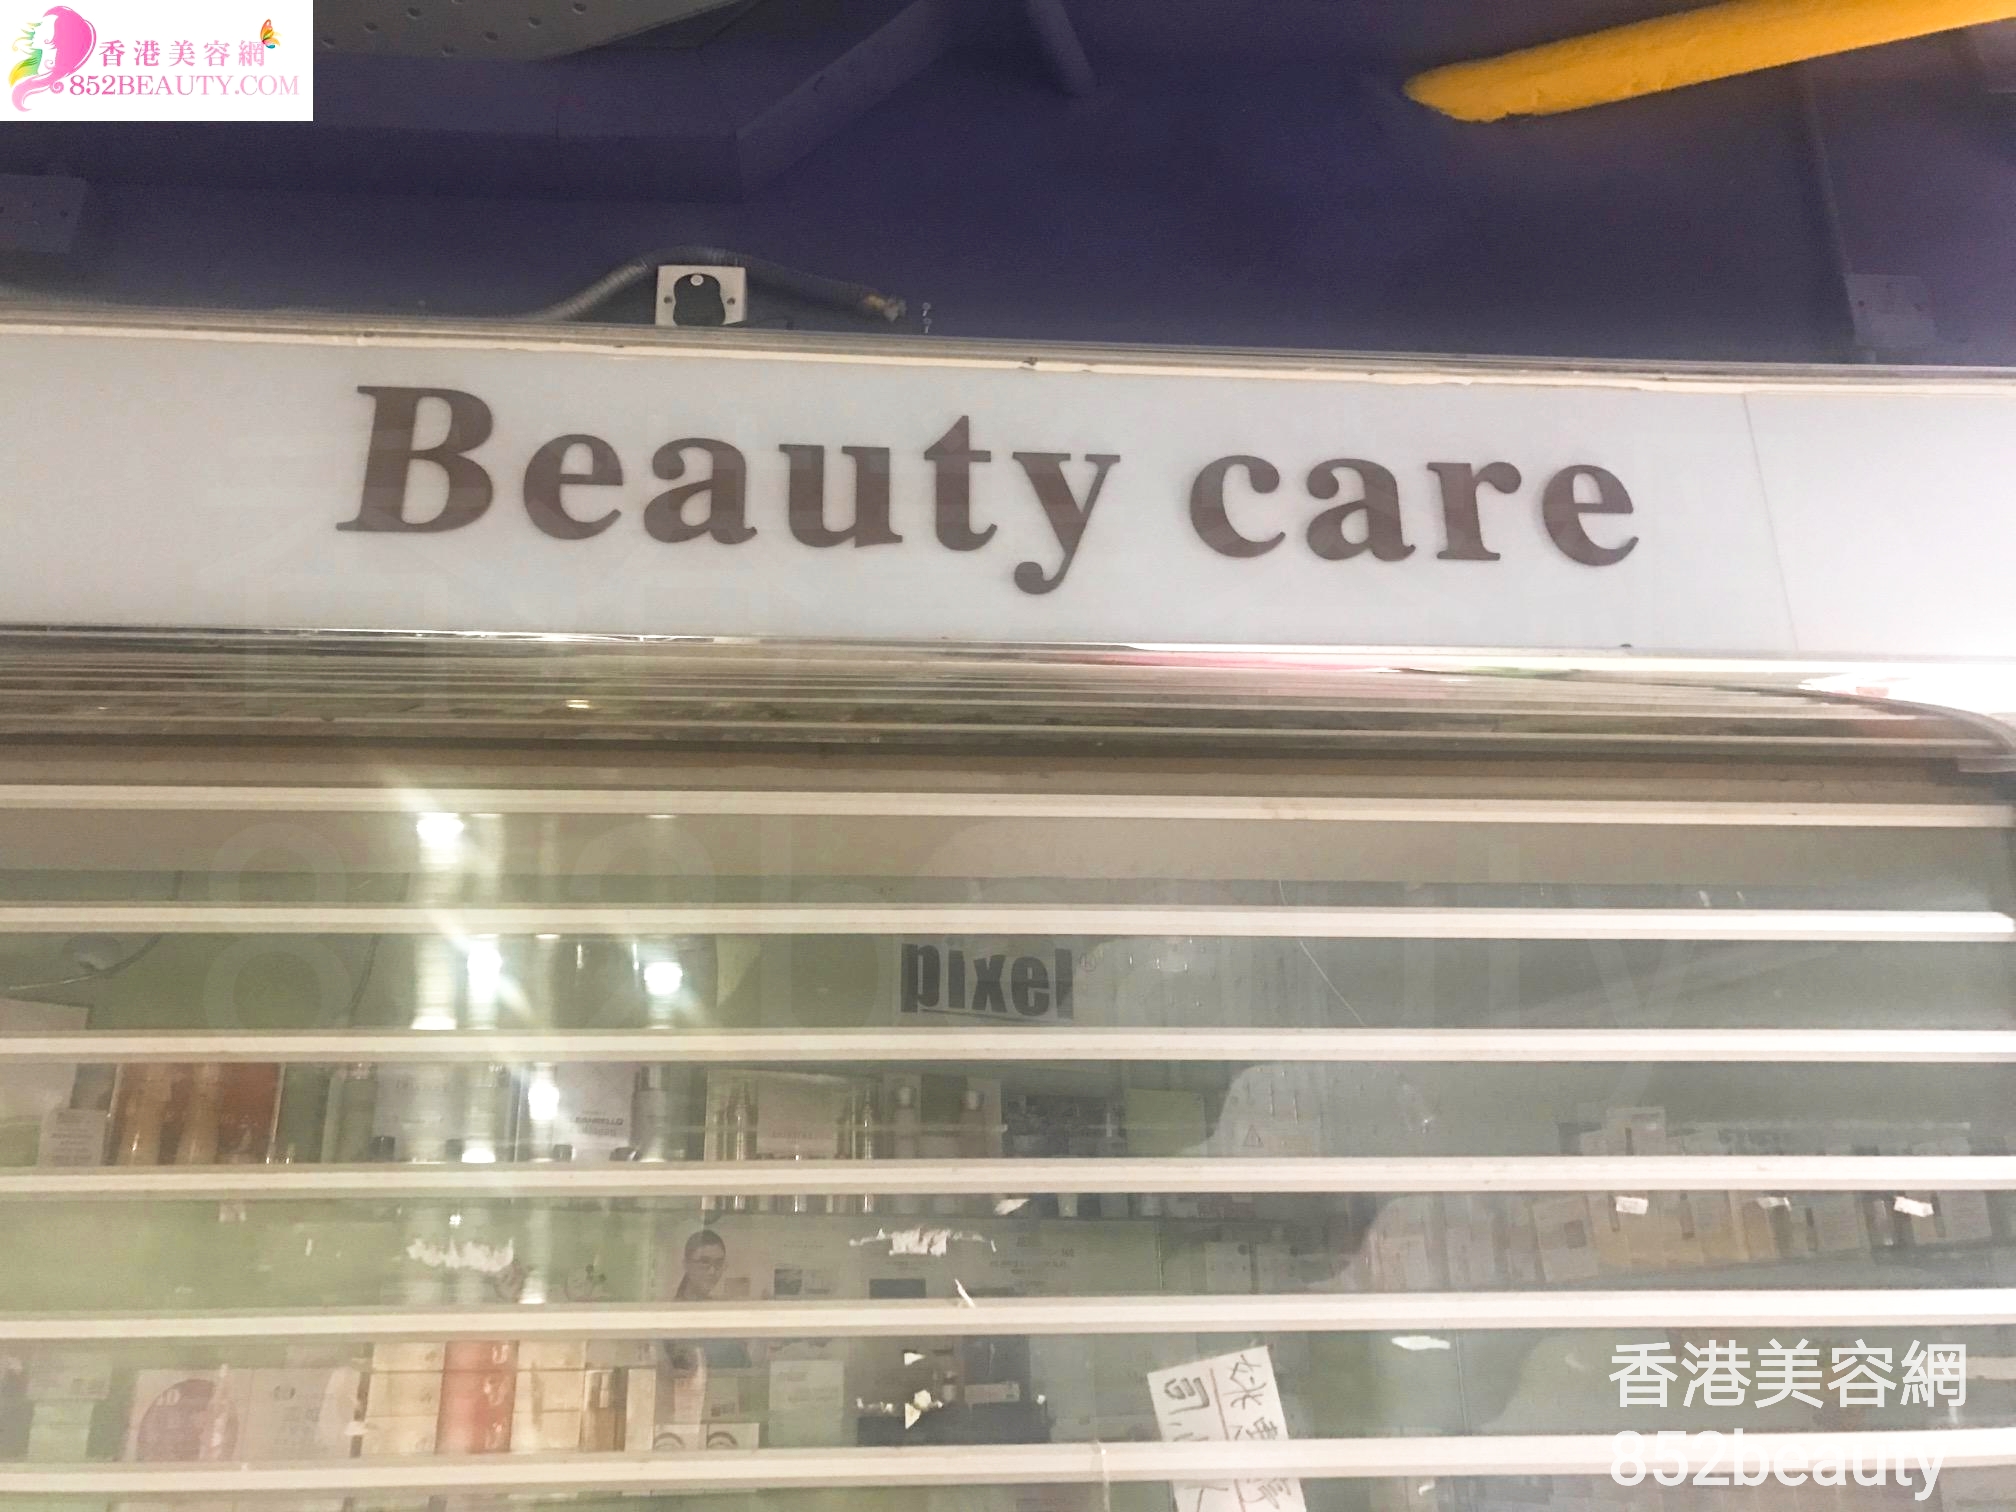 手腳護理: Beauty care